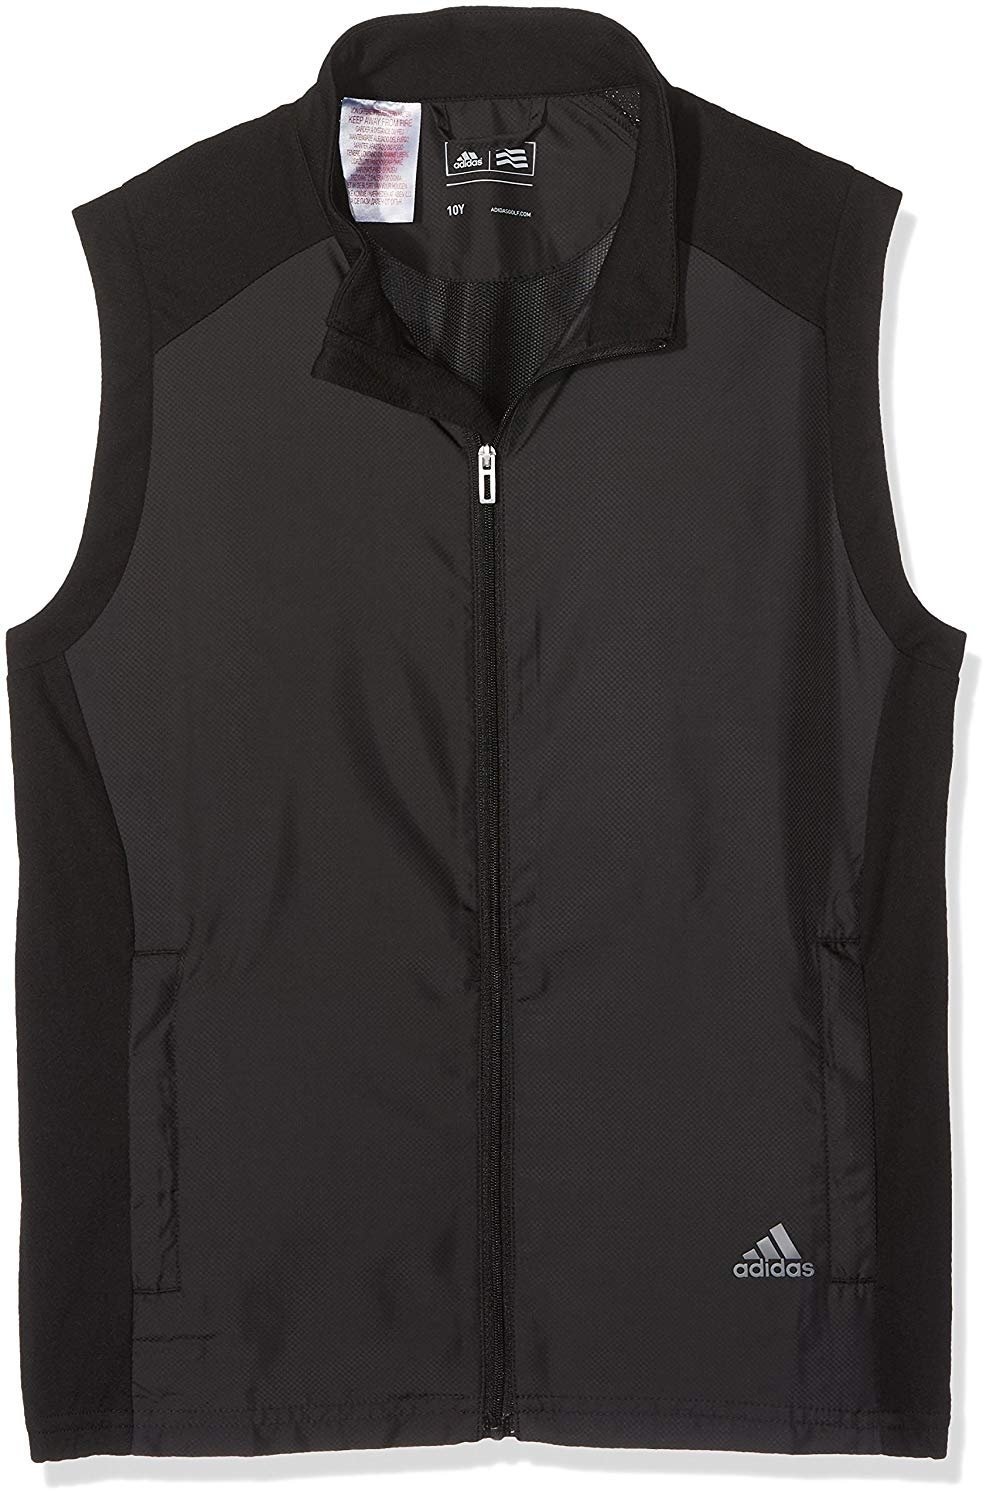 Kamizelka Adidas Performance Junior Vest Black 16Y